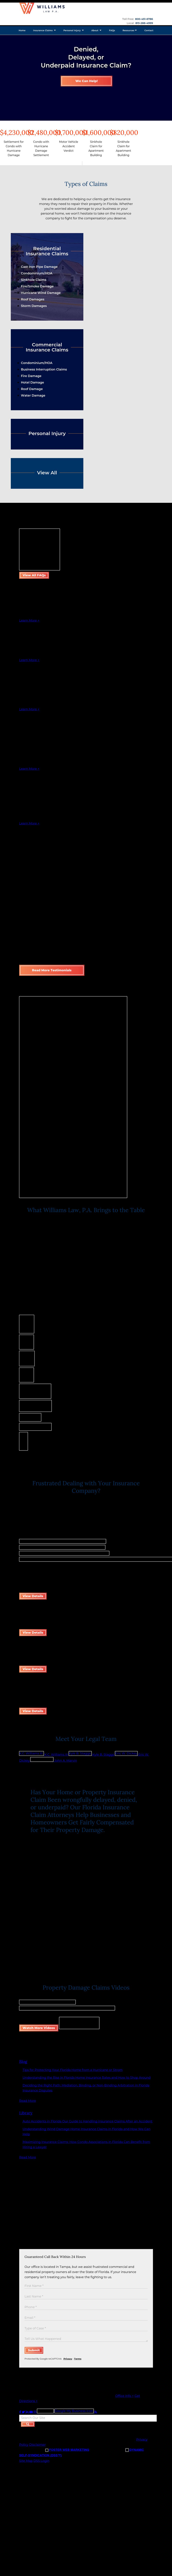 Williams Law, P.A. - Tampa FL Lawyers